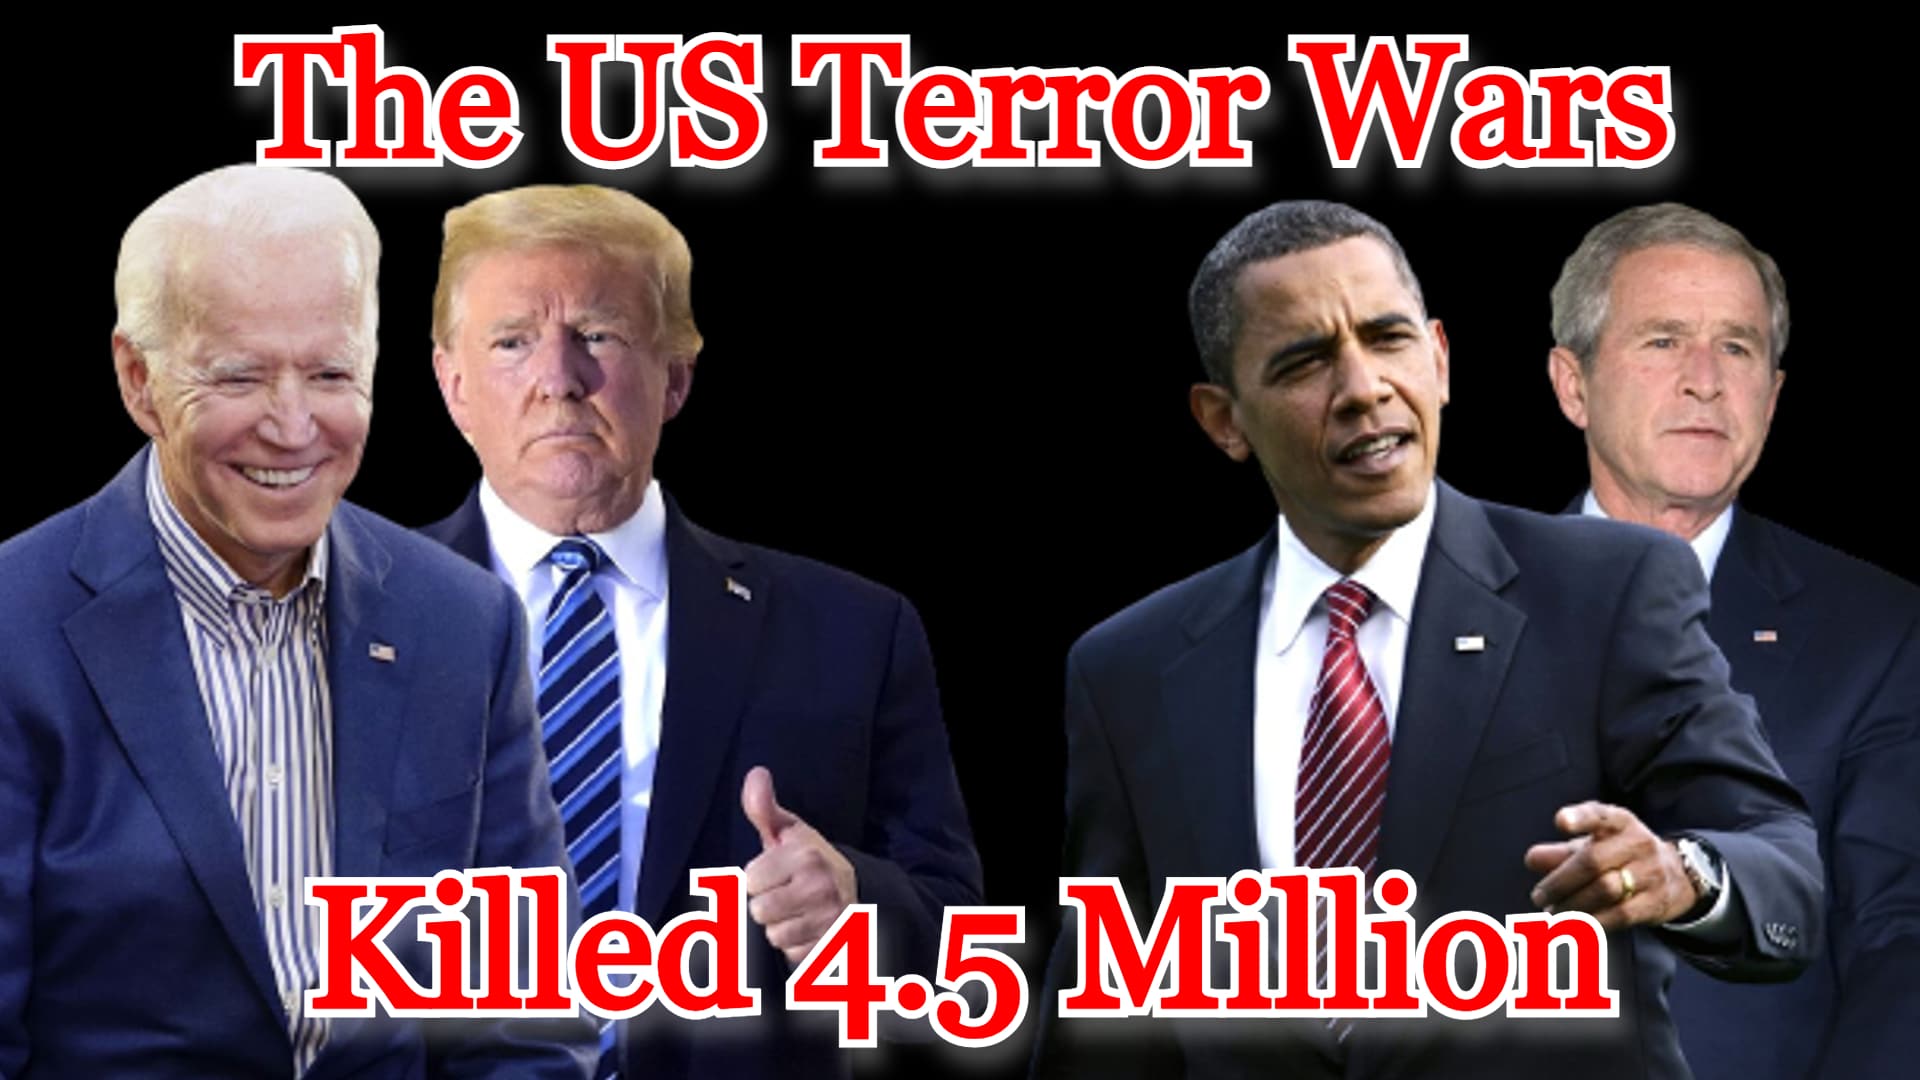 COI #422: The US Terror Wars Killed 4.5 Million